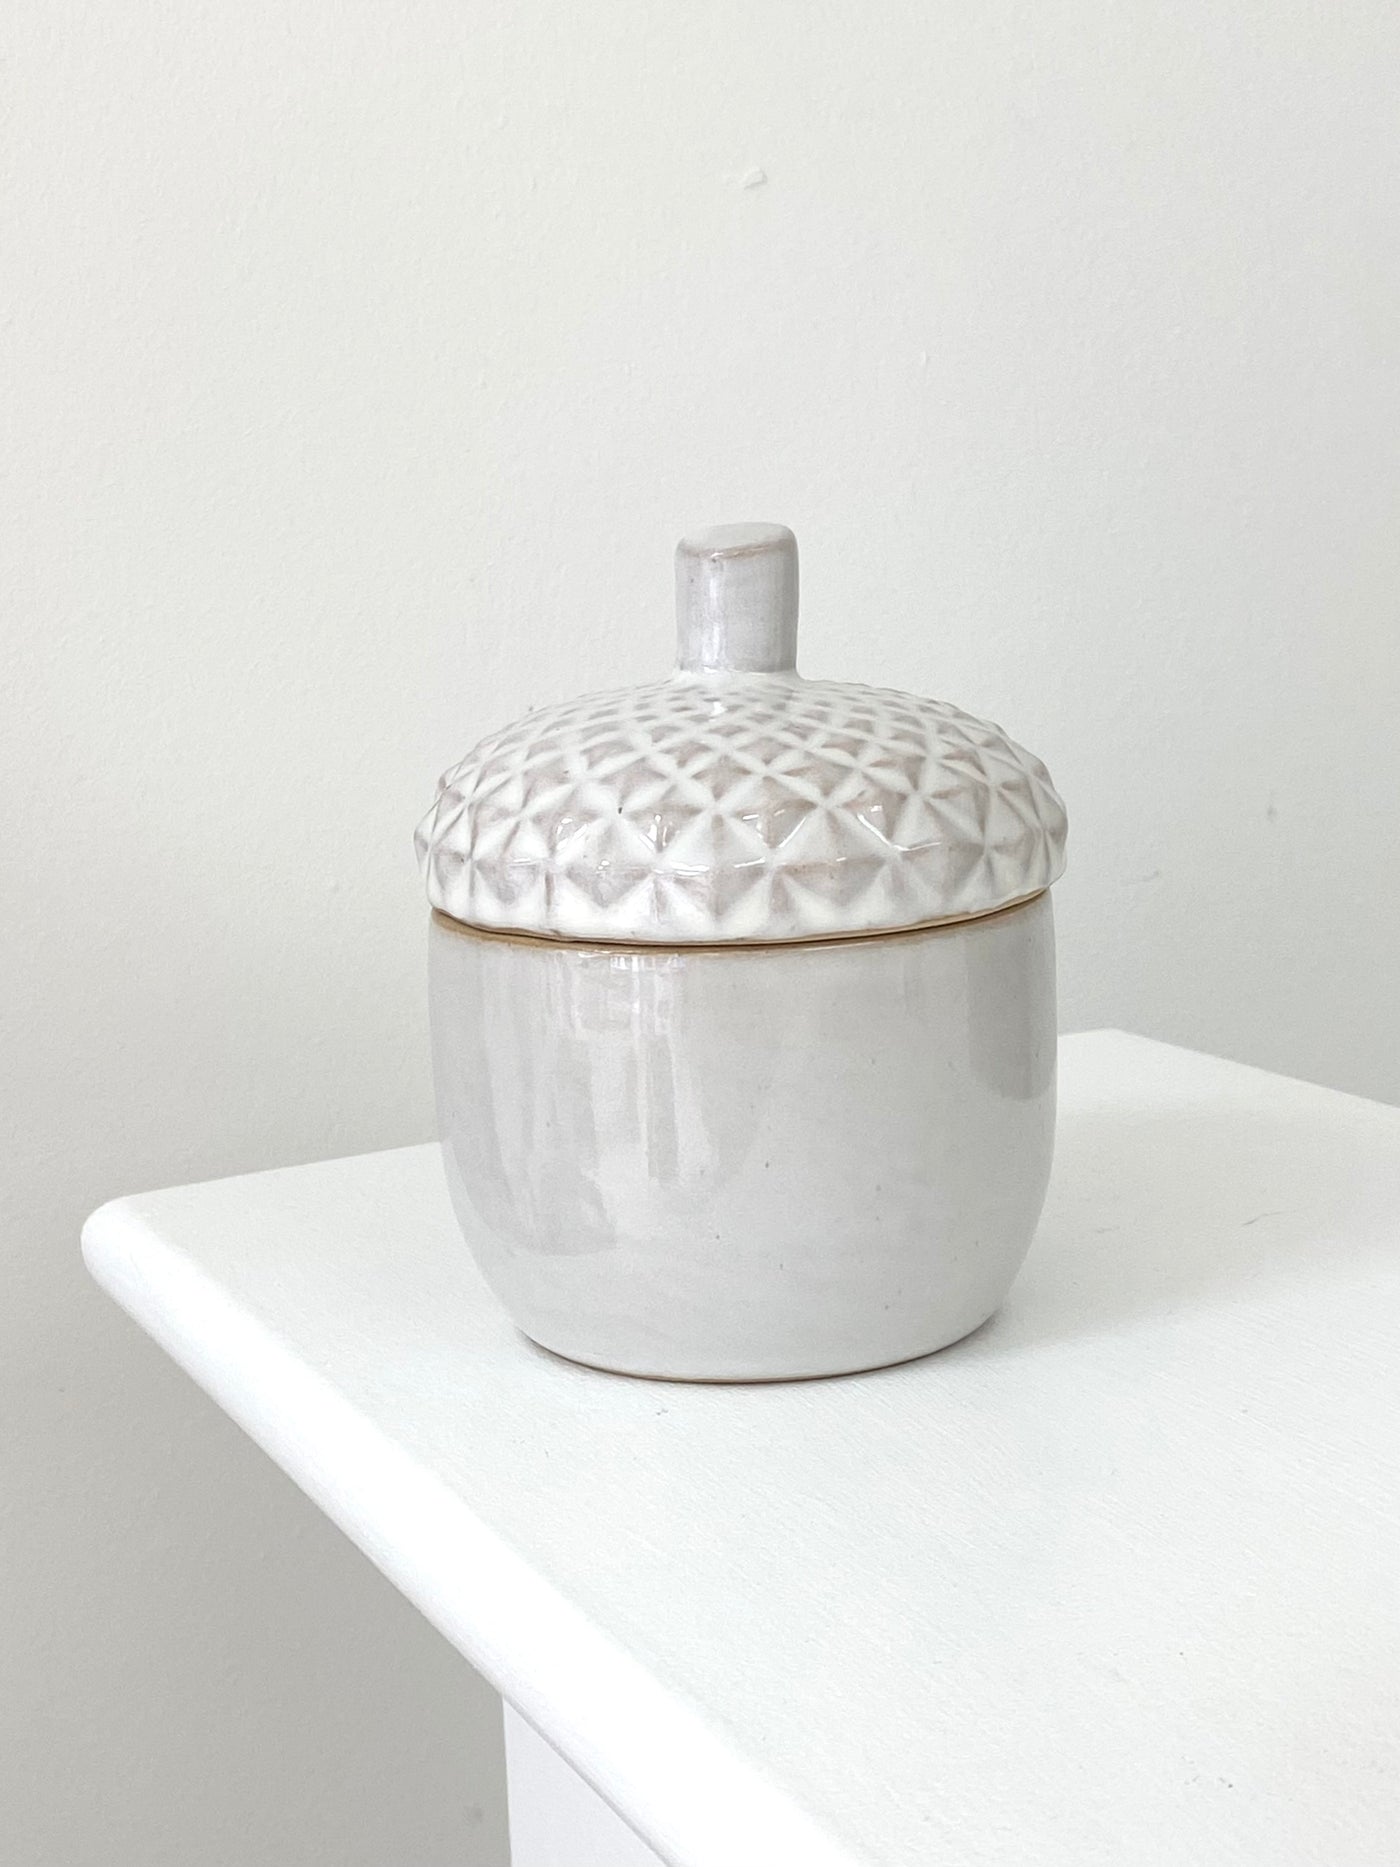 Ceramic Acorn Storage Pot - Small